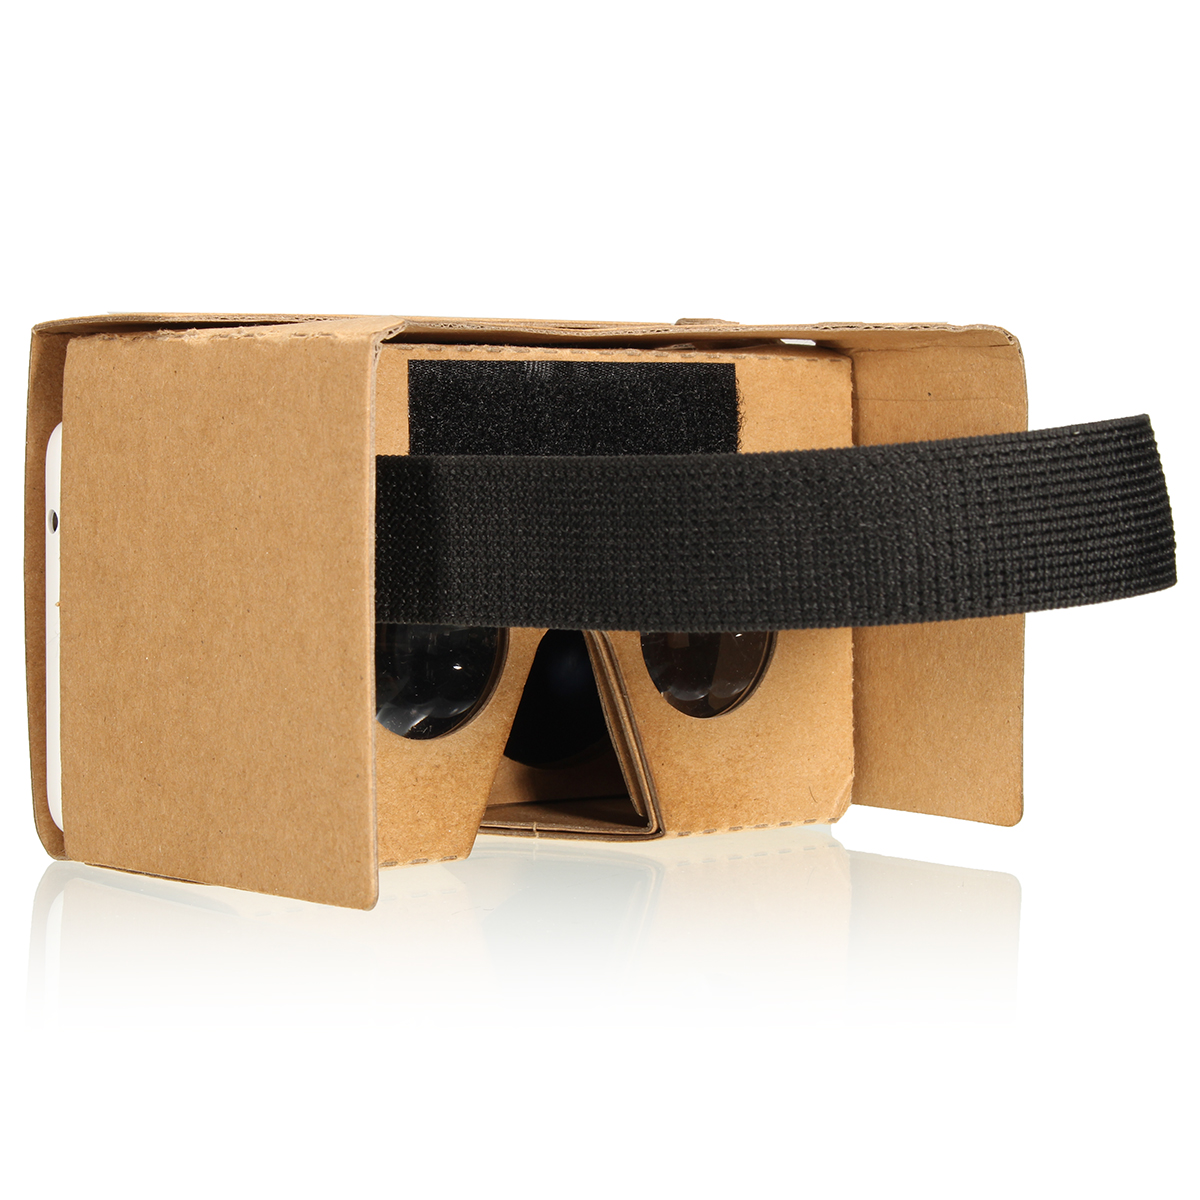 3D-Virtual-Reality-Glasses-For-Google-Cardboard-V2--Valencia-Max-6-Inch-Phone-1027806